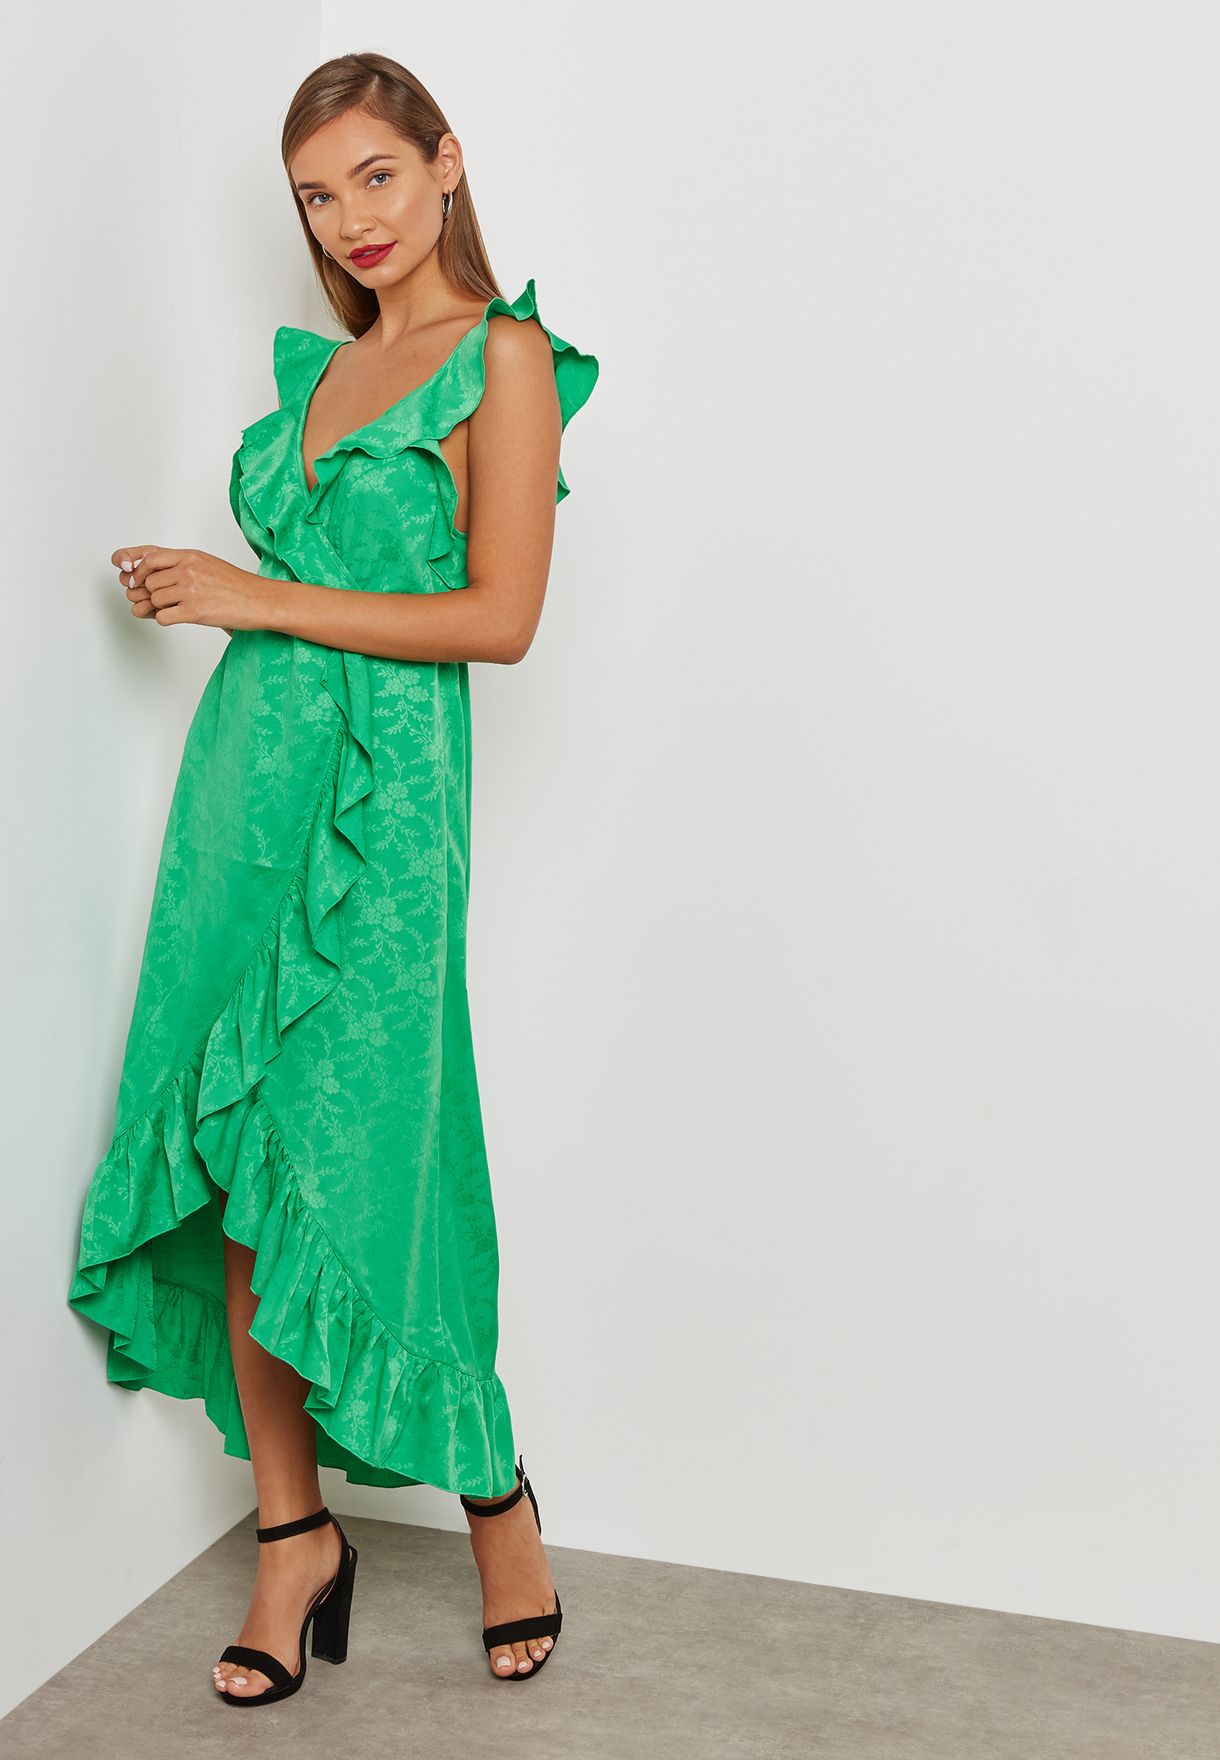 topshop green jacquard dress Big sale ...